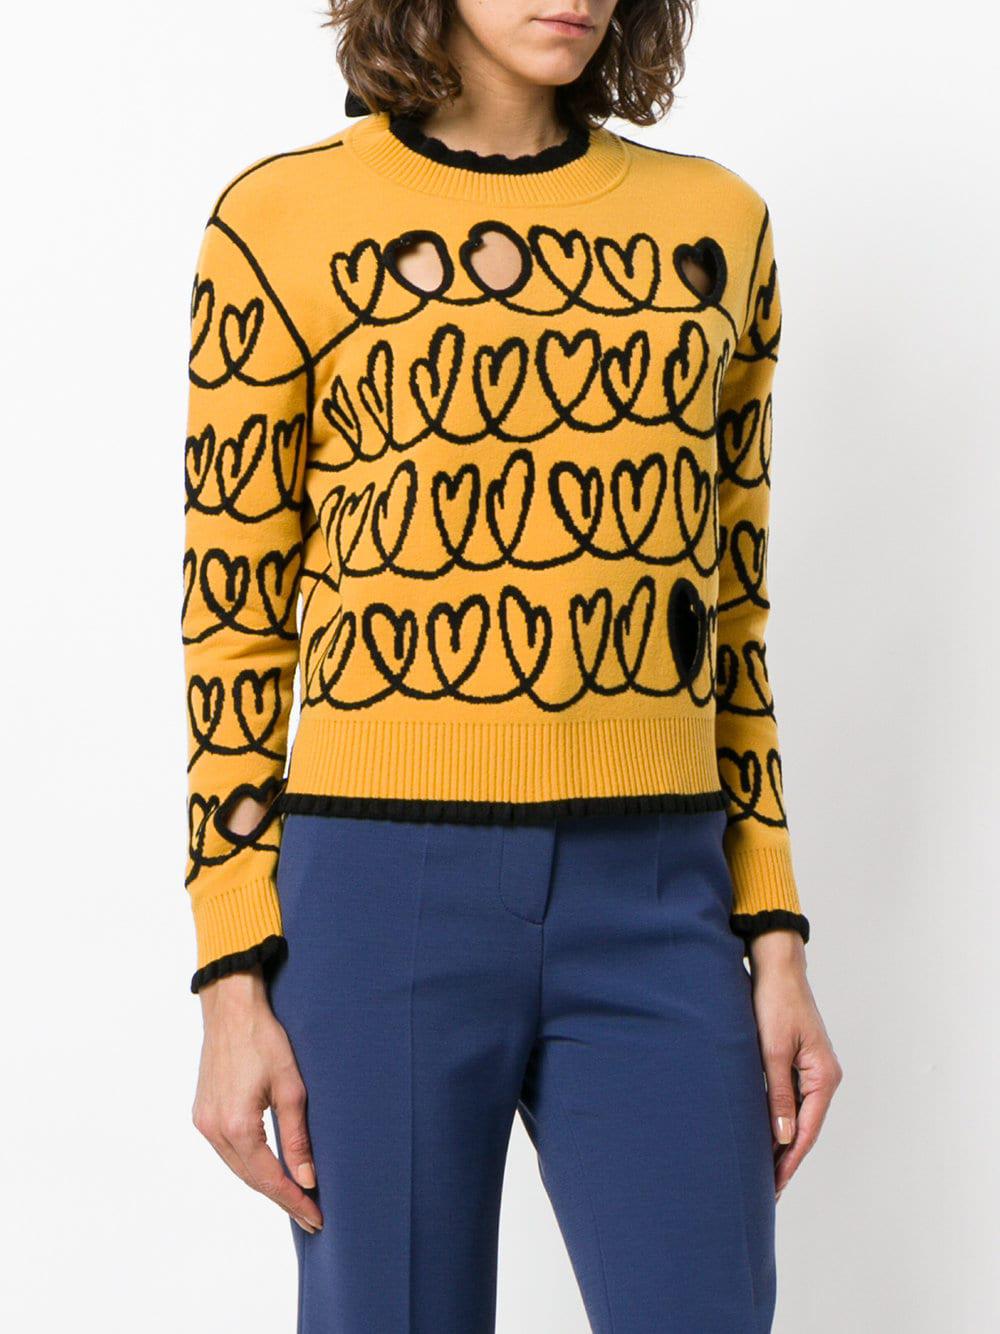 fendi heart sweater